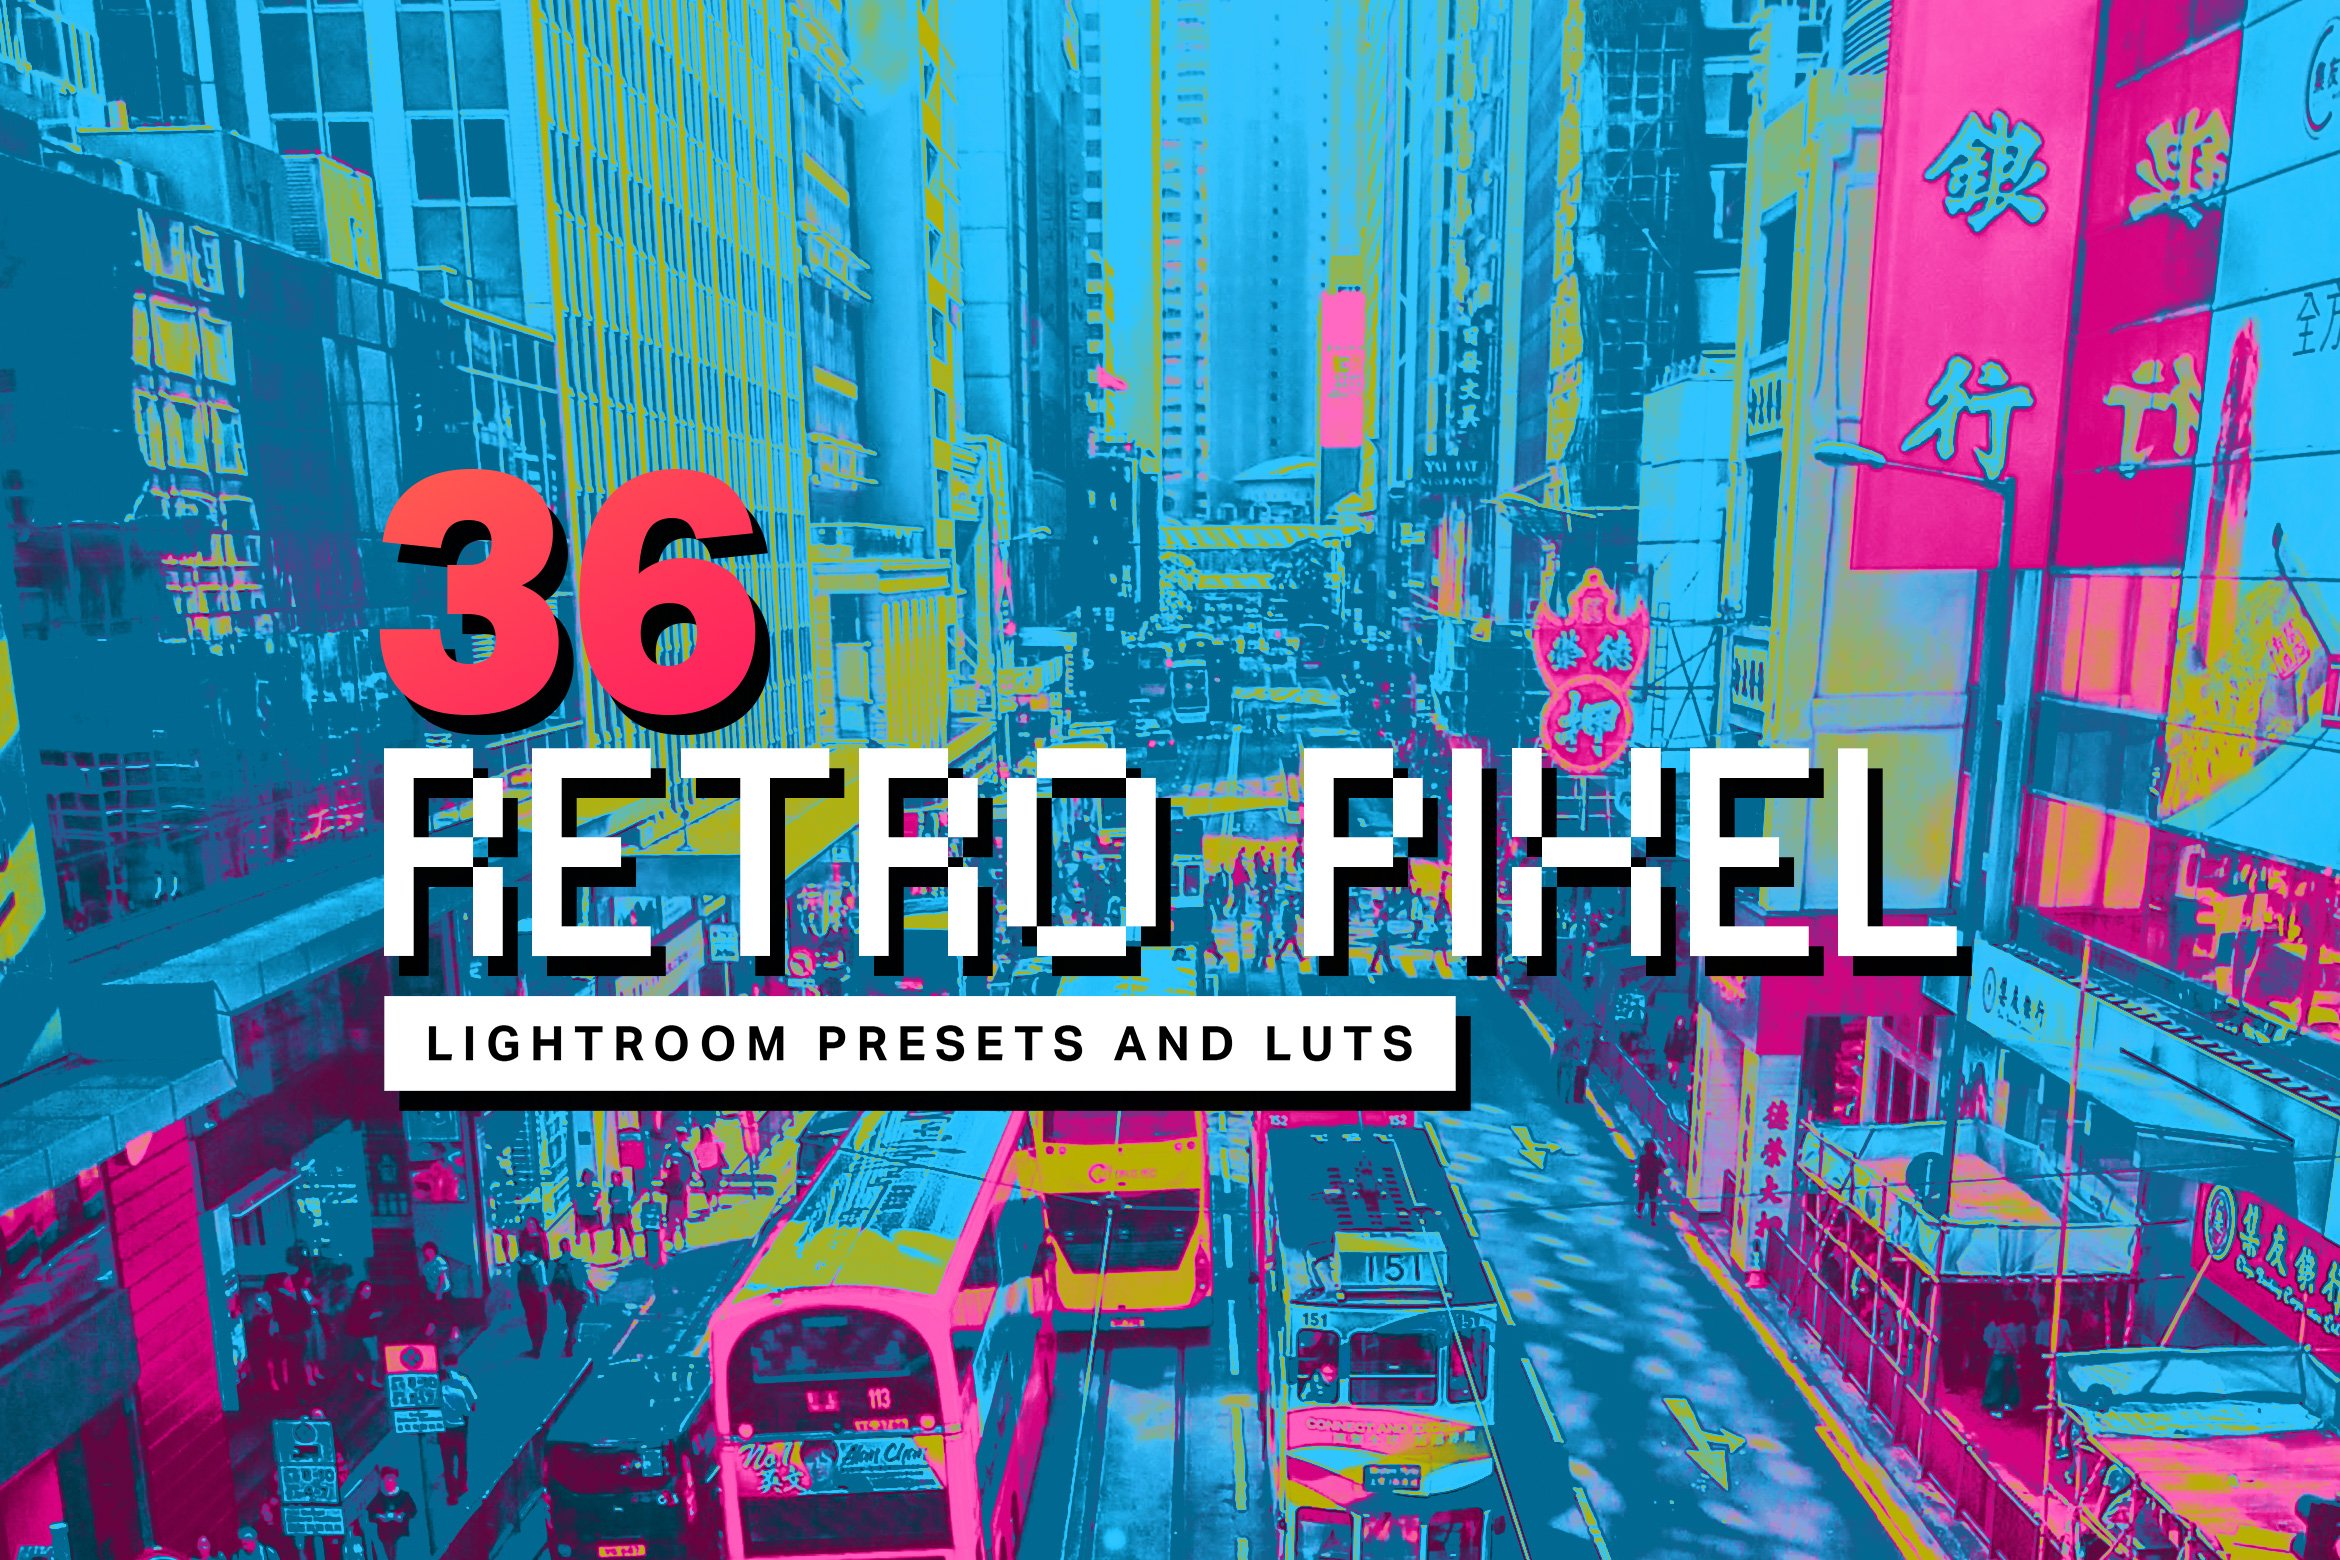 36 Retro Pixel Lightroom Presetscover image.